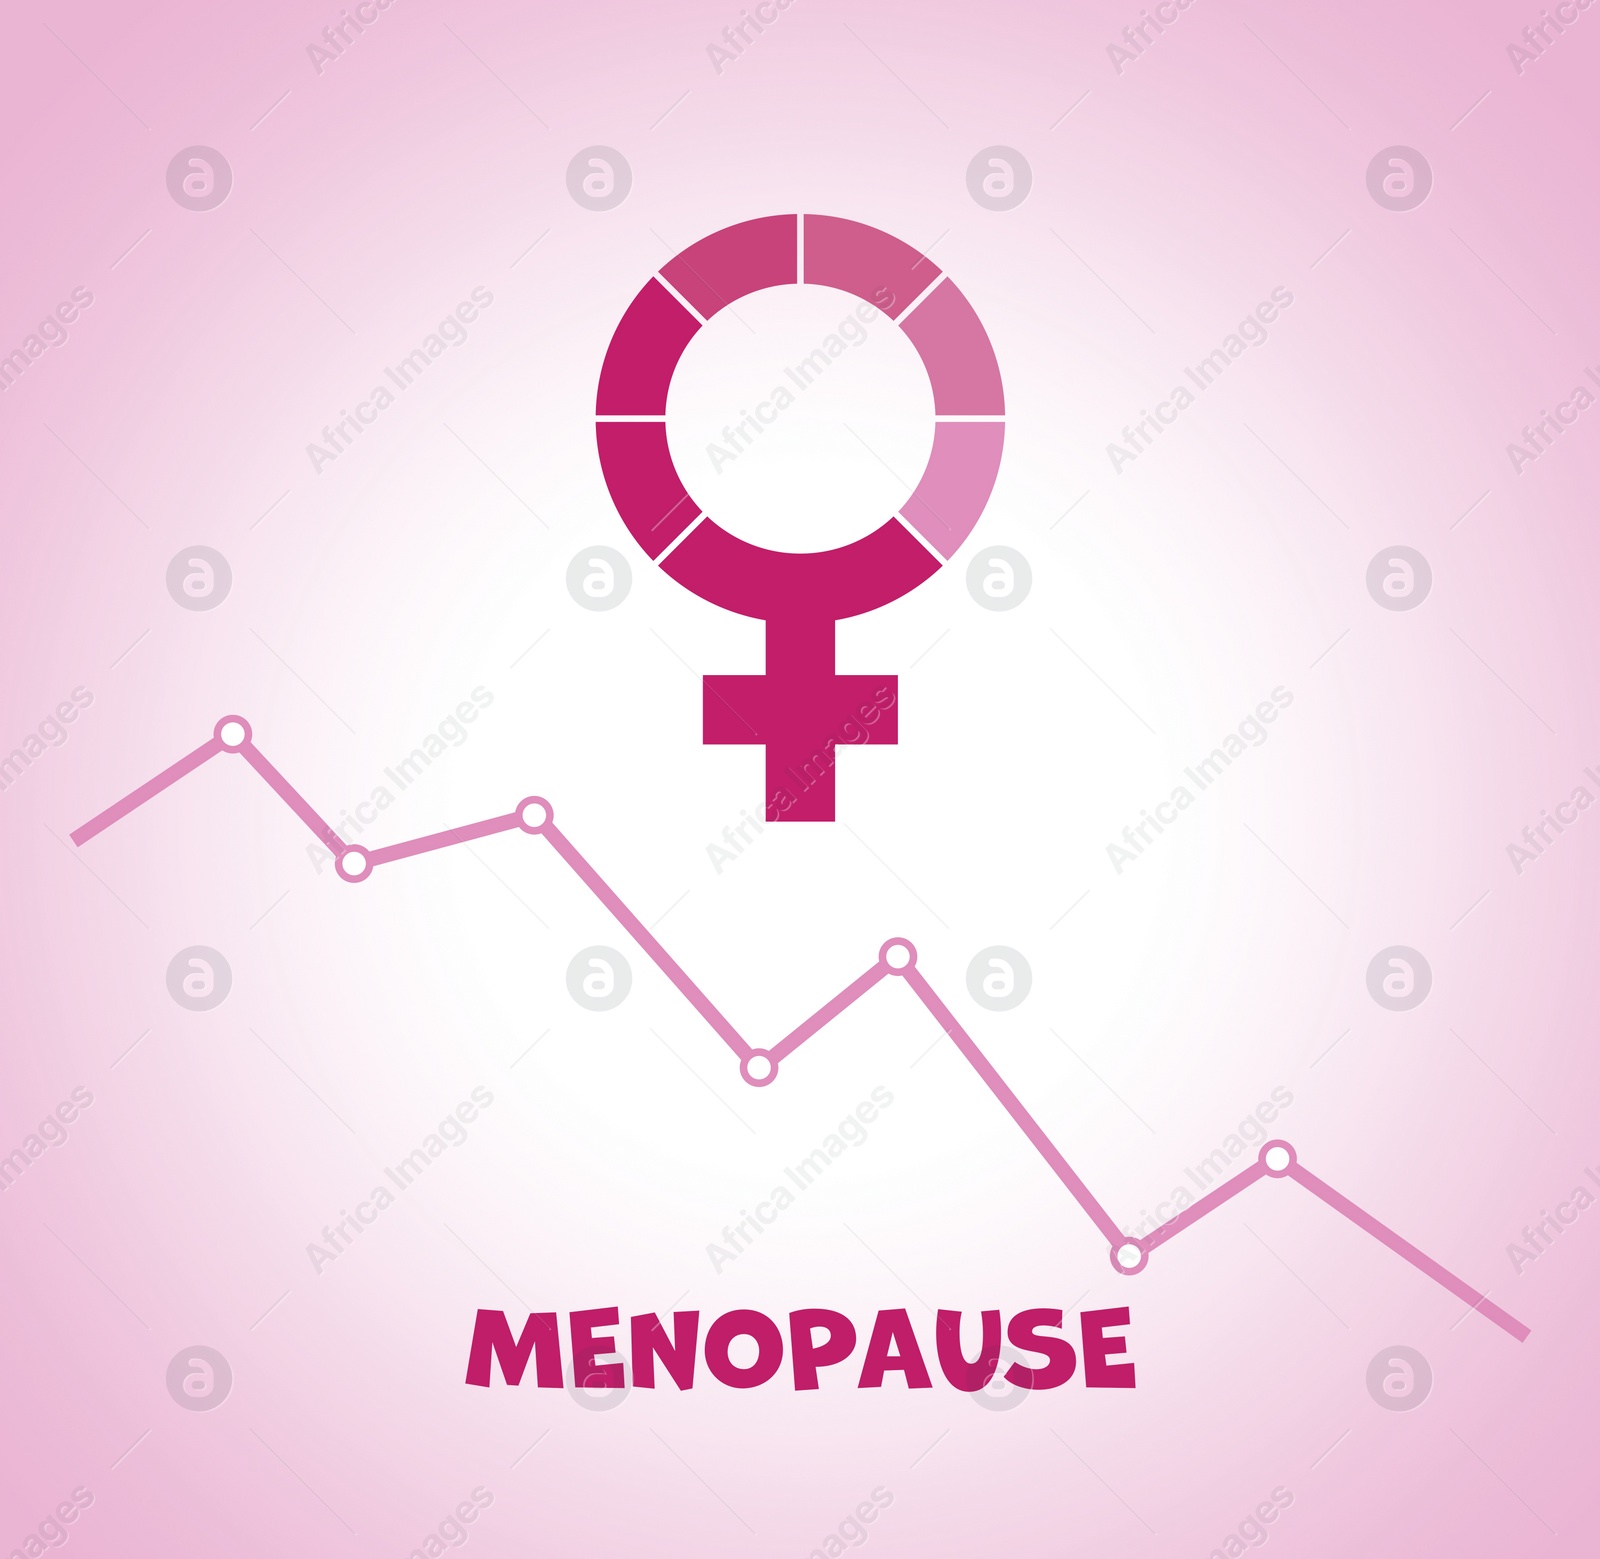 Illustration of Menstrual cycle. Word Menopause, female gender symbol and descending line graph on pink background